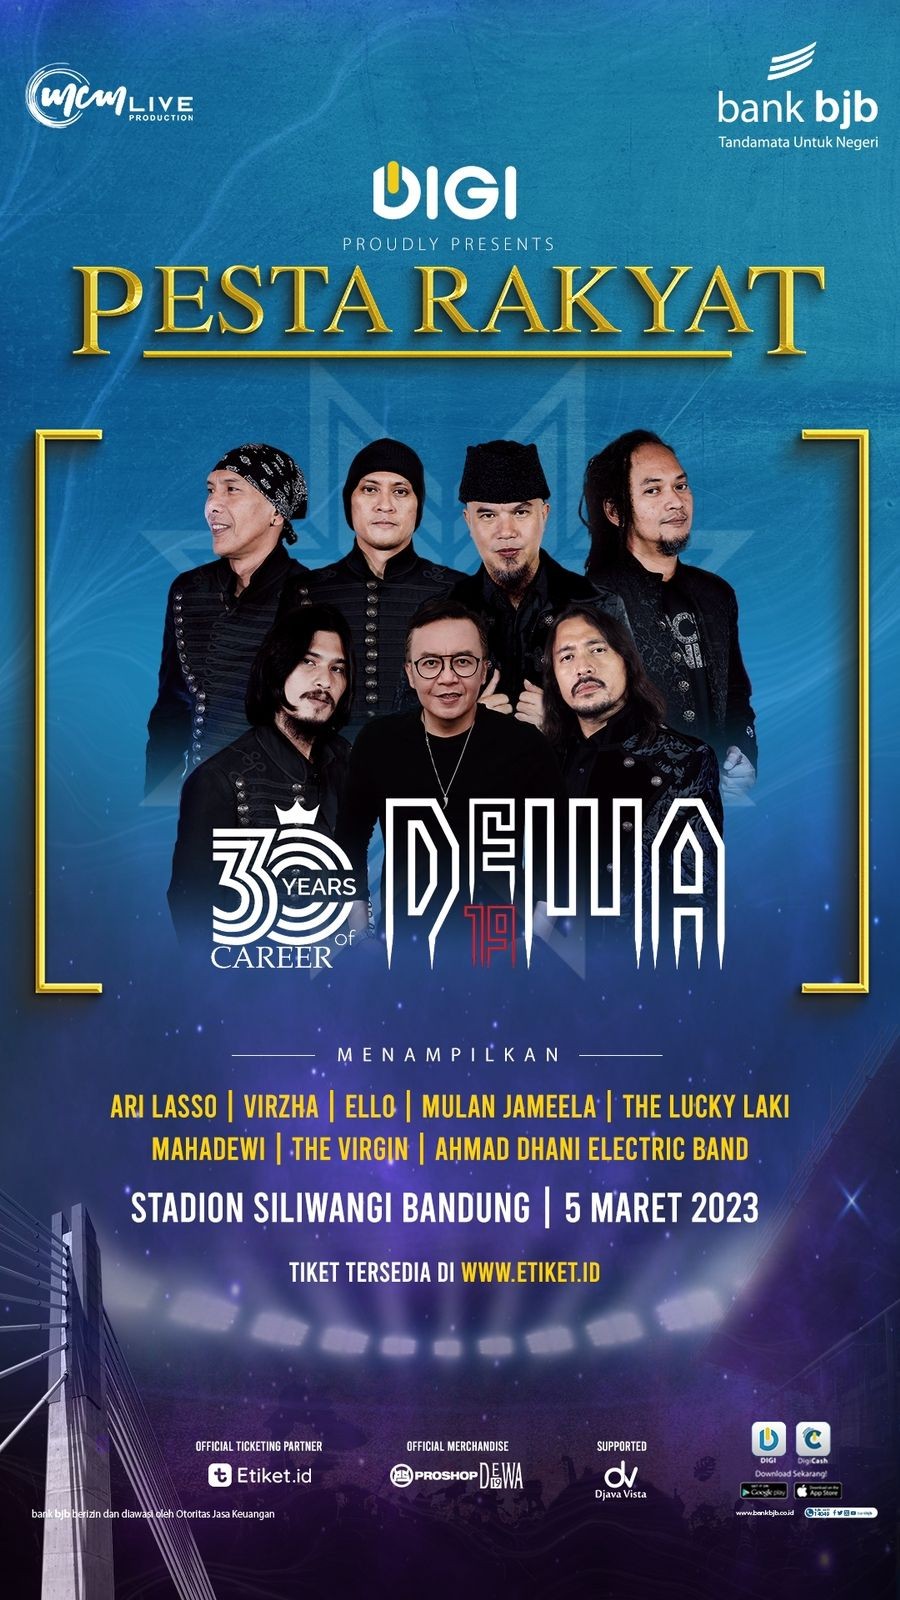 Tiga Dekade, Dewa 19 Gelar Konser Pesta Rakyat di Kota Bandung 